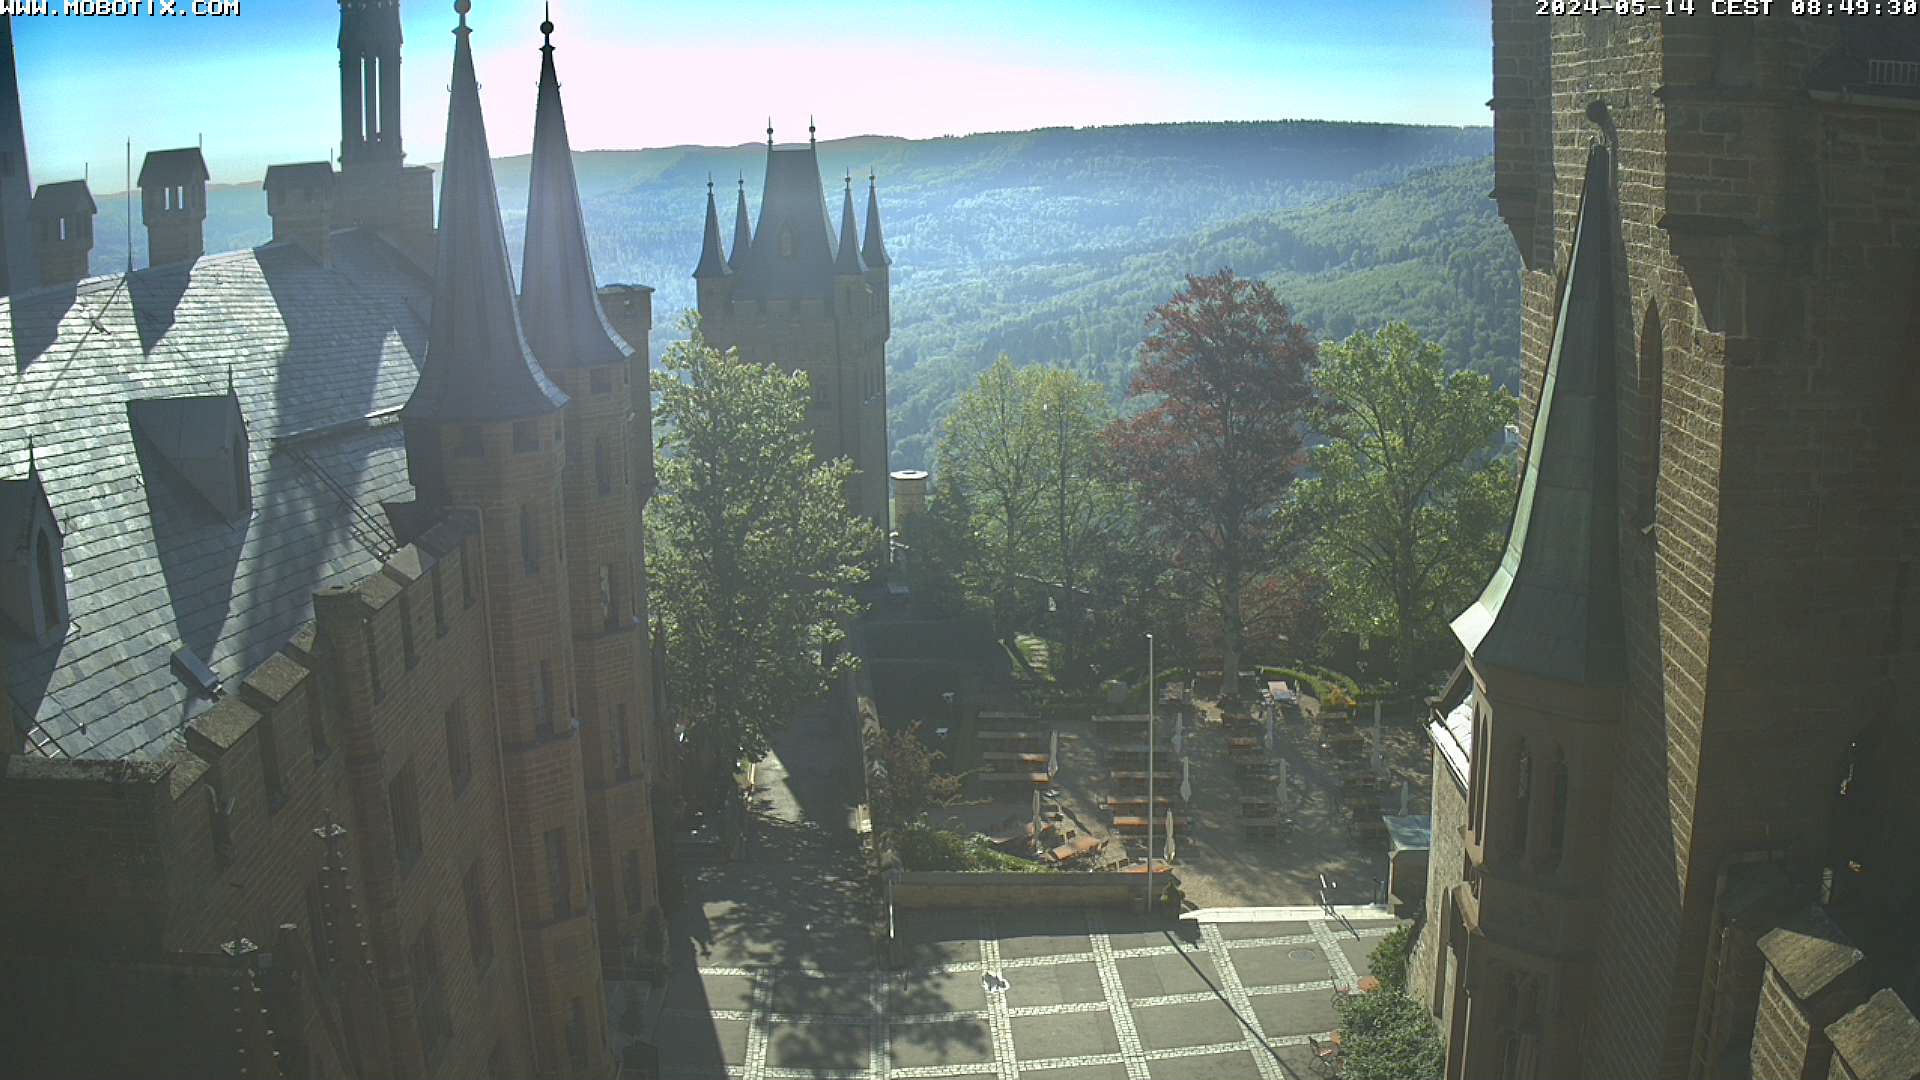 Burg Hohenzollern Thu. 08:50